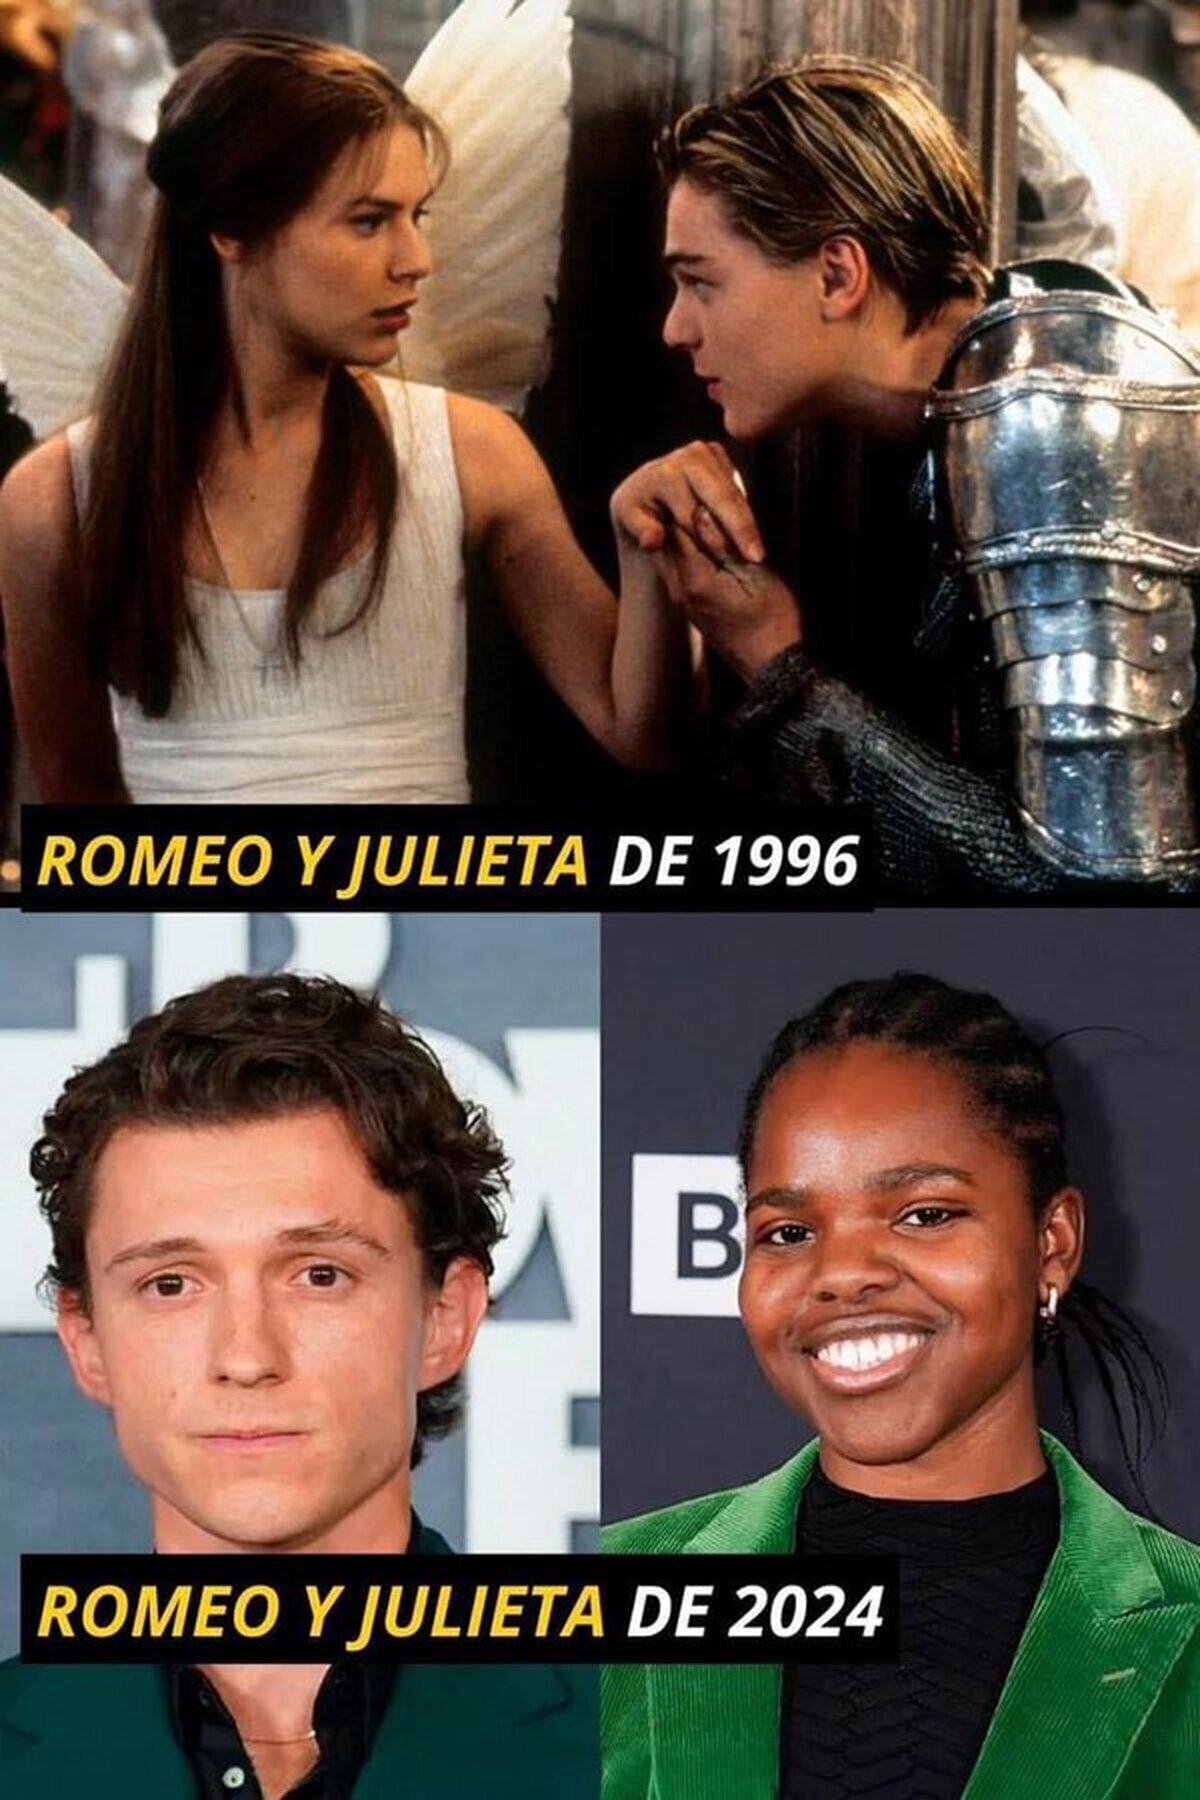 Romeo y Julieta en 2024